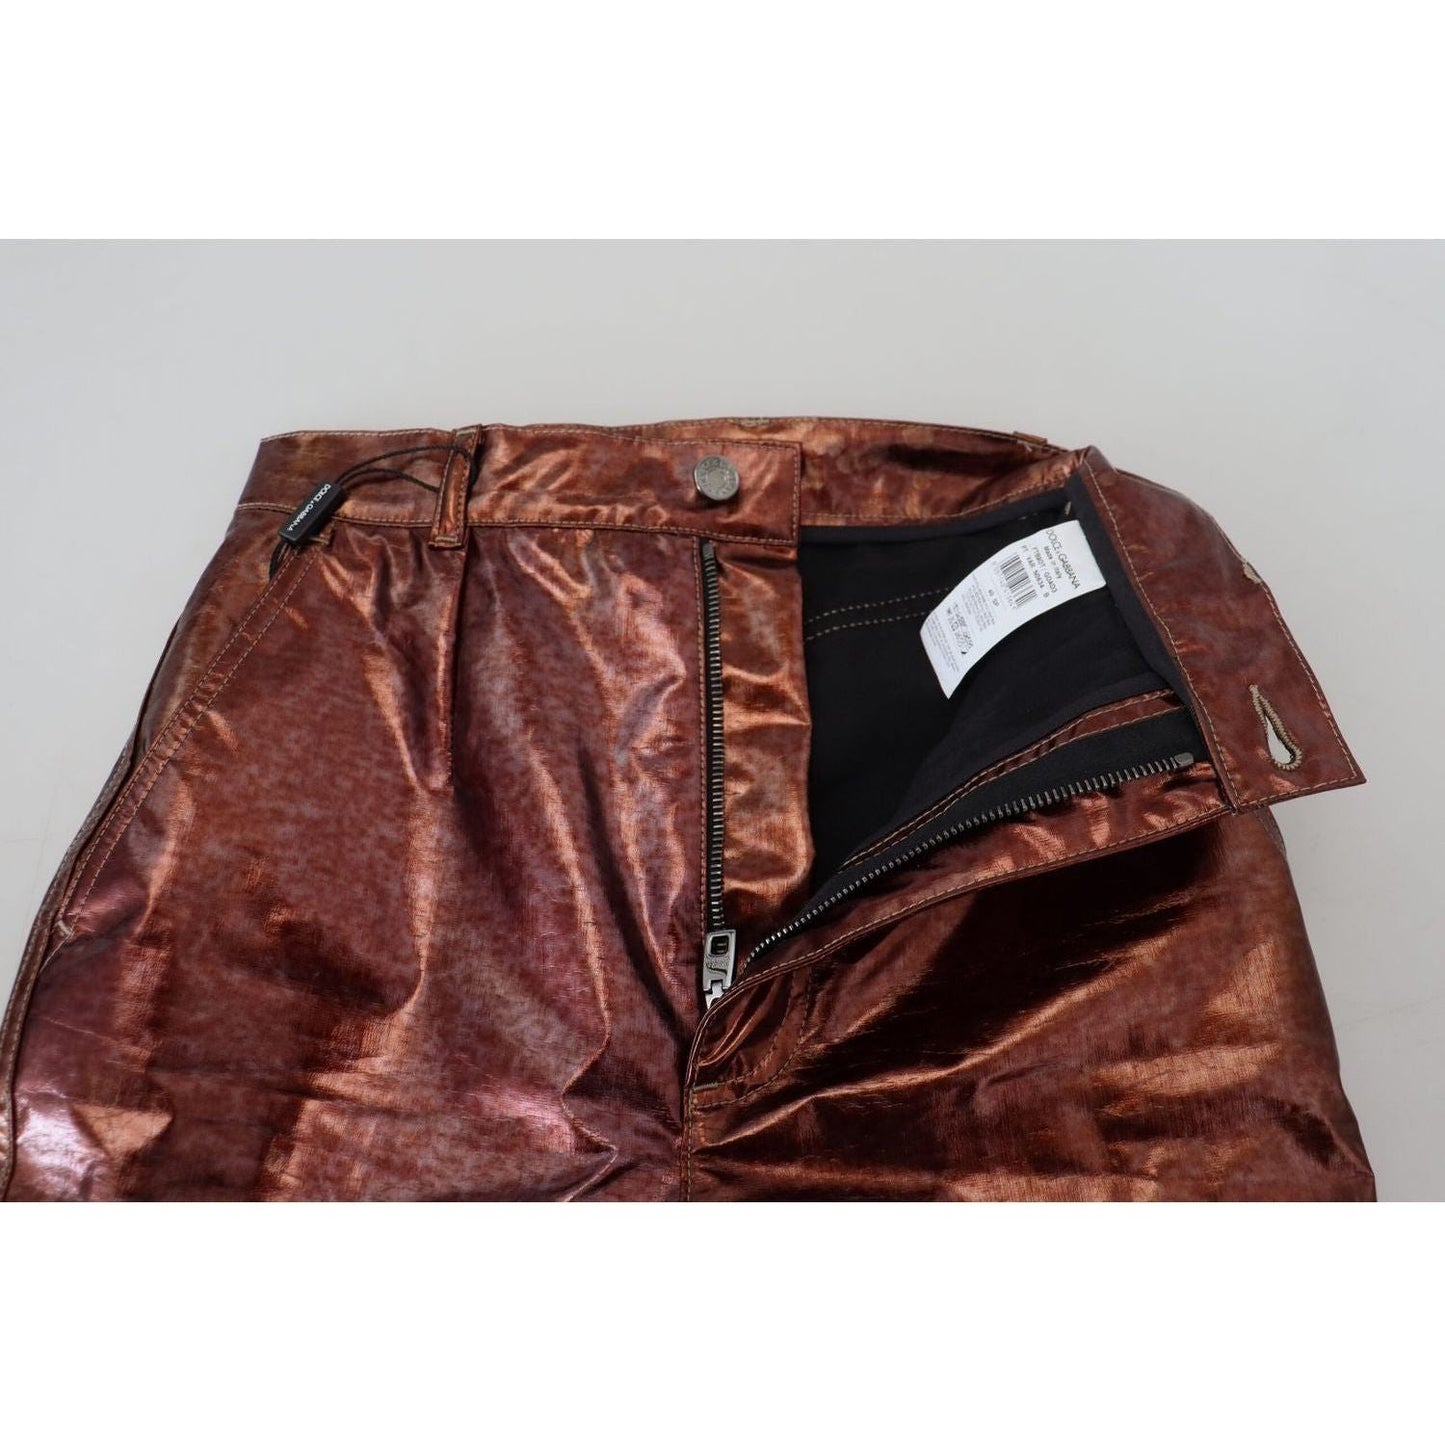 Dolce & Gabbana High Waist Skinny Jeans in Metallic Bronze metallic-bronze-high-waist-skinny-jeans IMG_9566-scaled-a362d010-c44.jpg